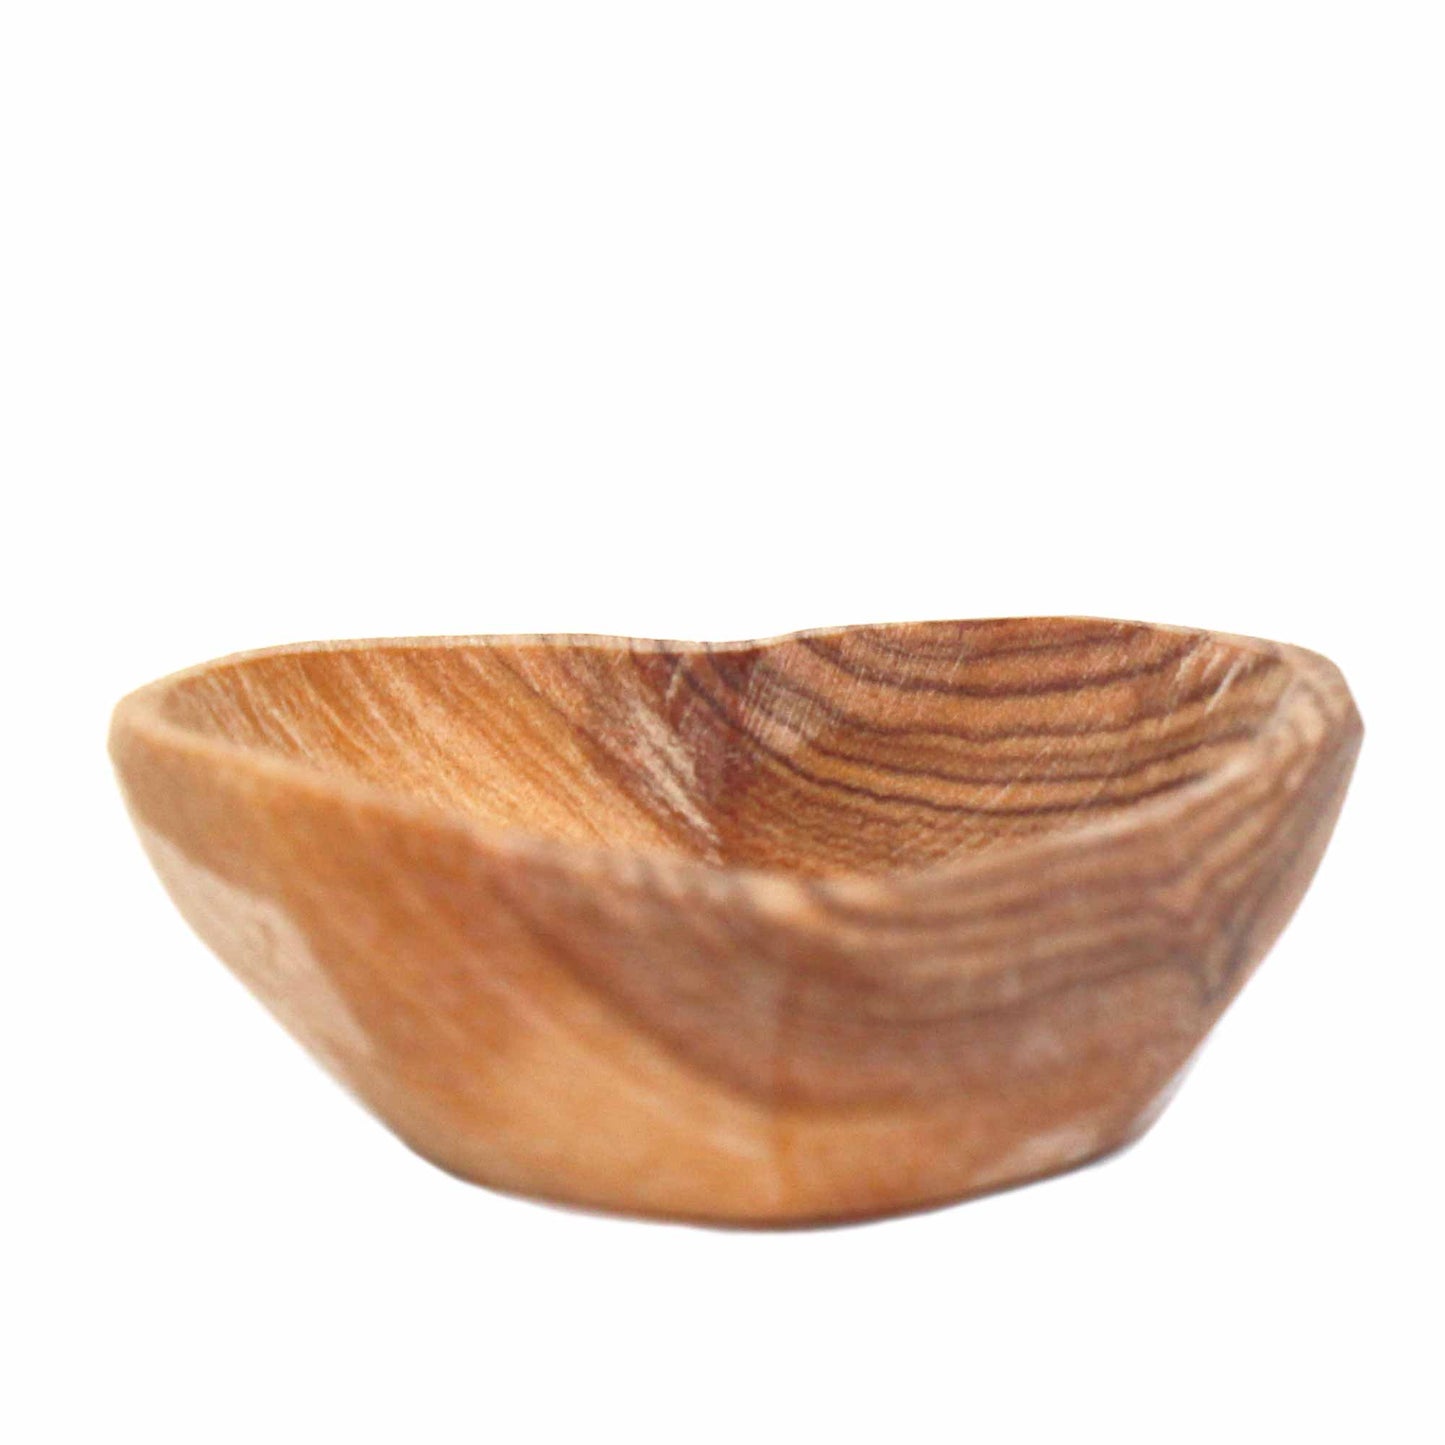 Petite Olive Wood Heart Bowls - Pack of 2 - Recetas Fair Trade